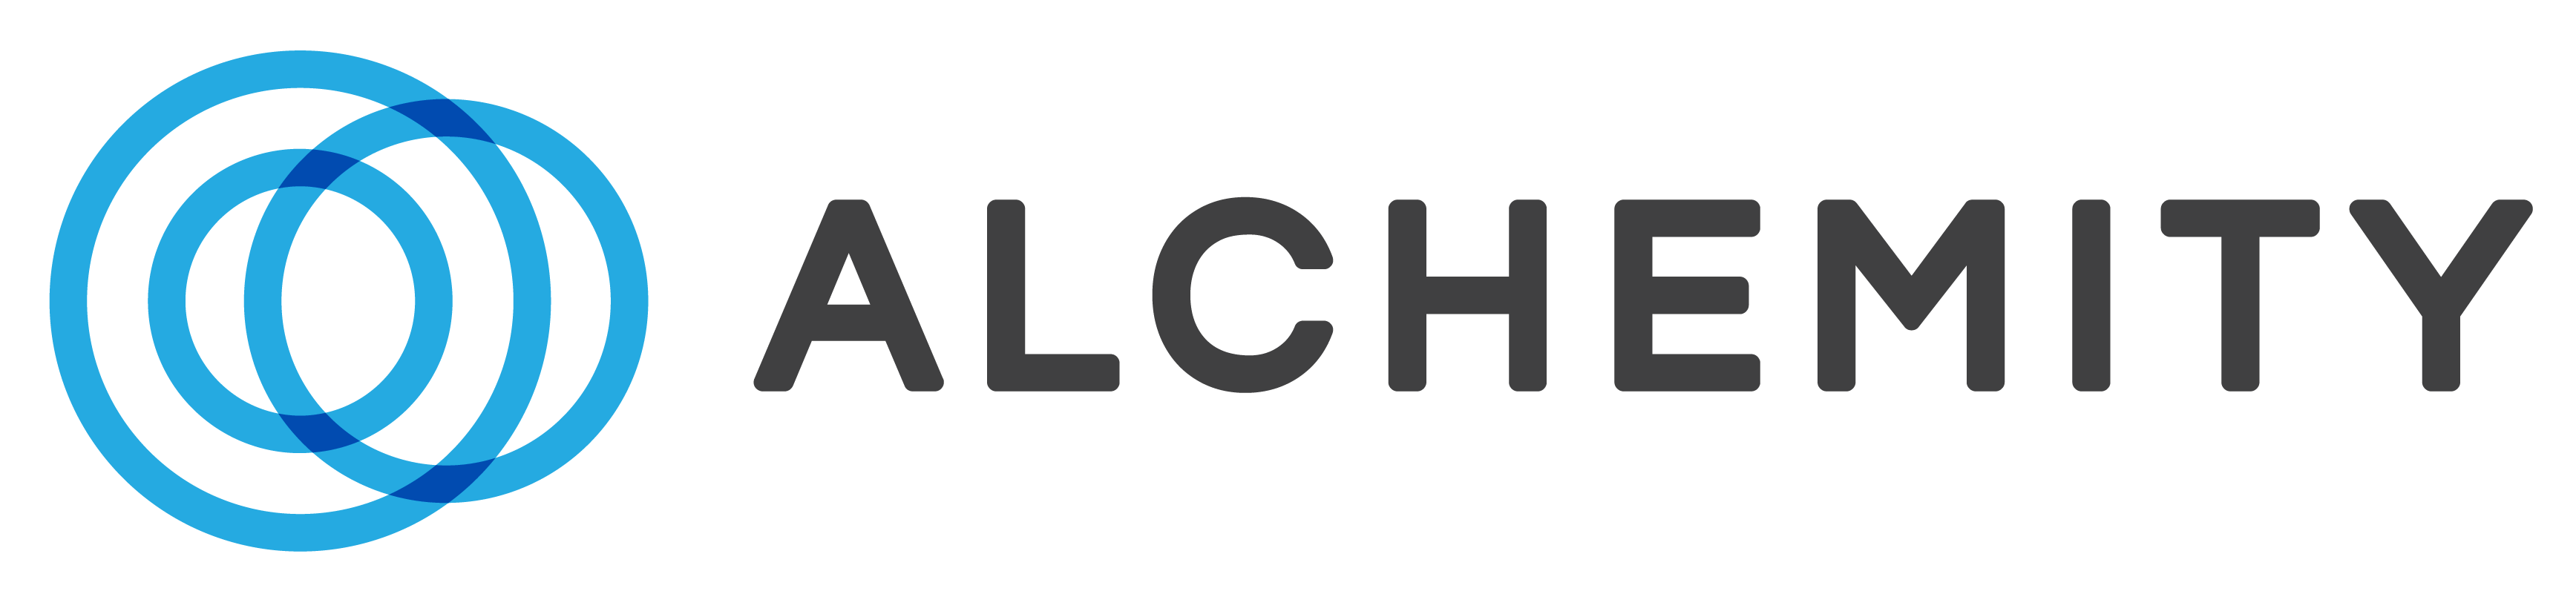 Alchemity logo